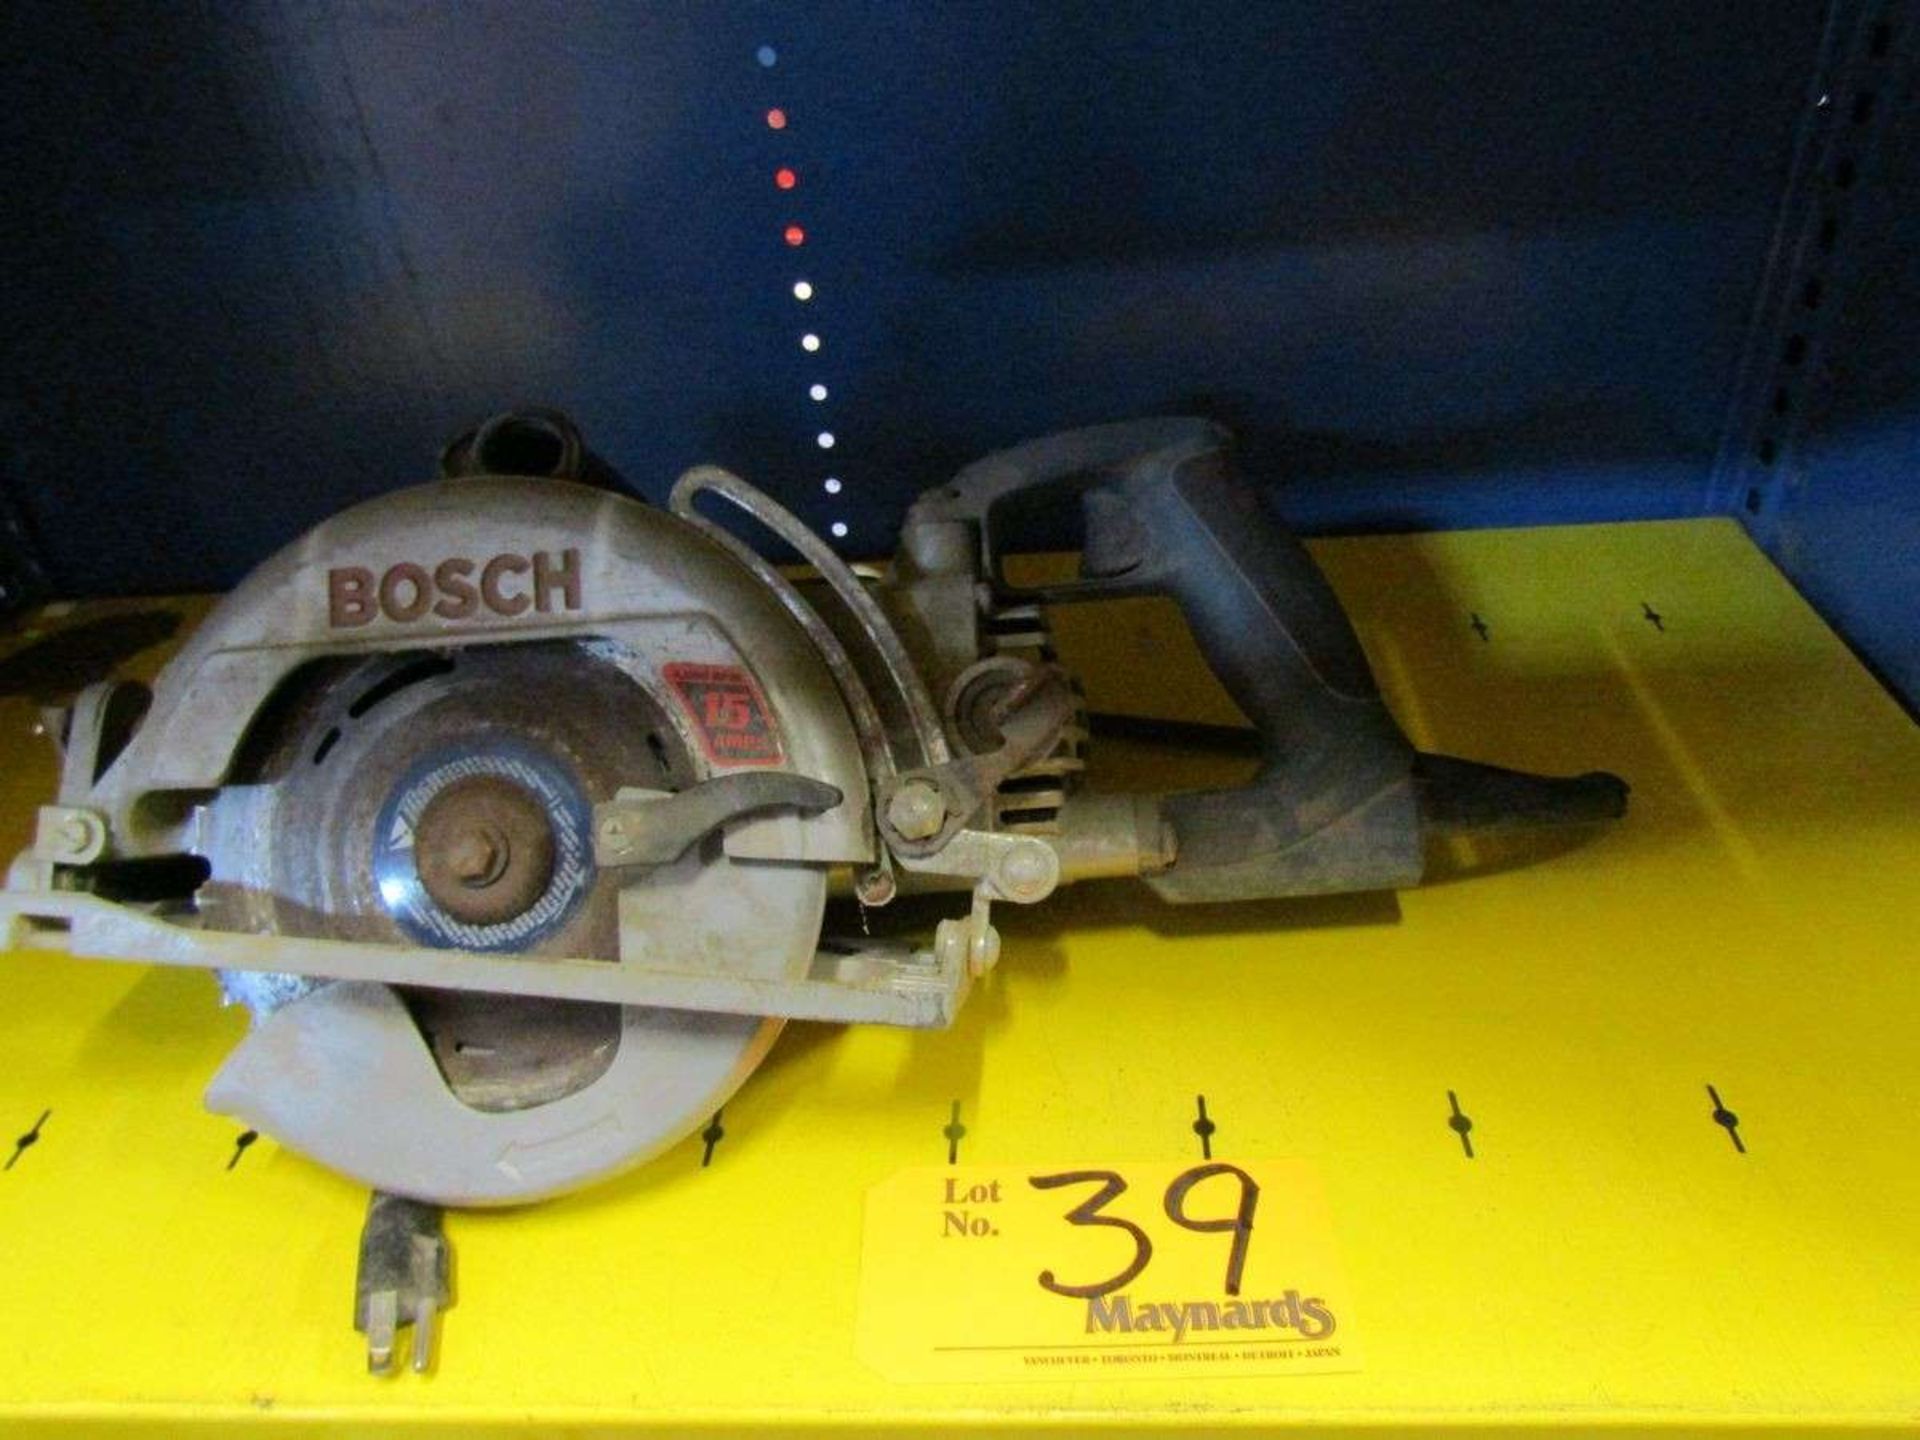 Bosch 1677M 7-1/4" Electric Worm Drive Circular Saw